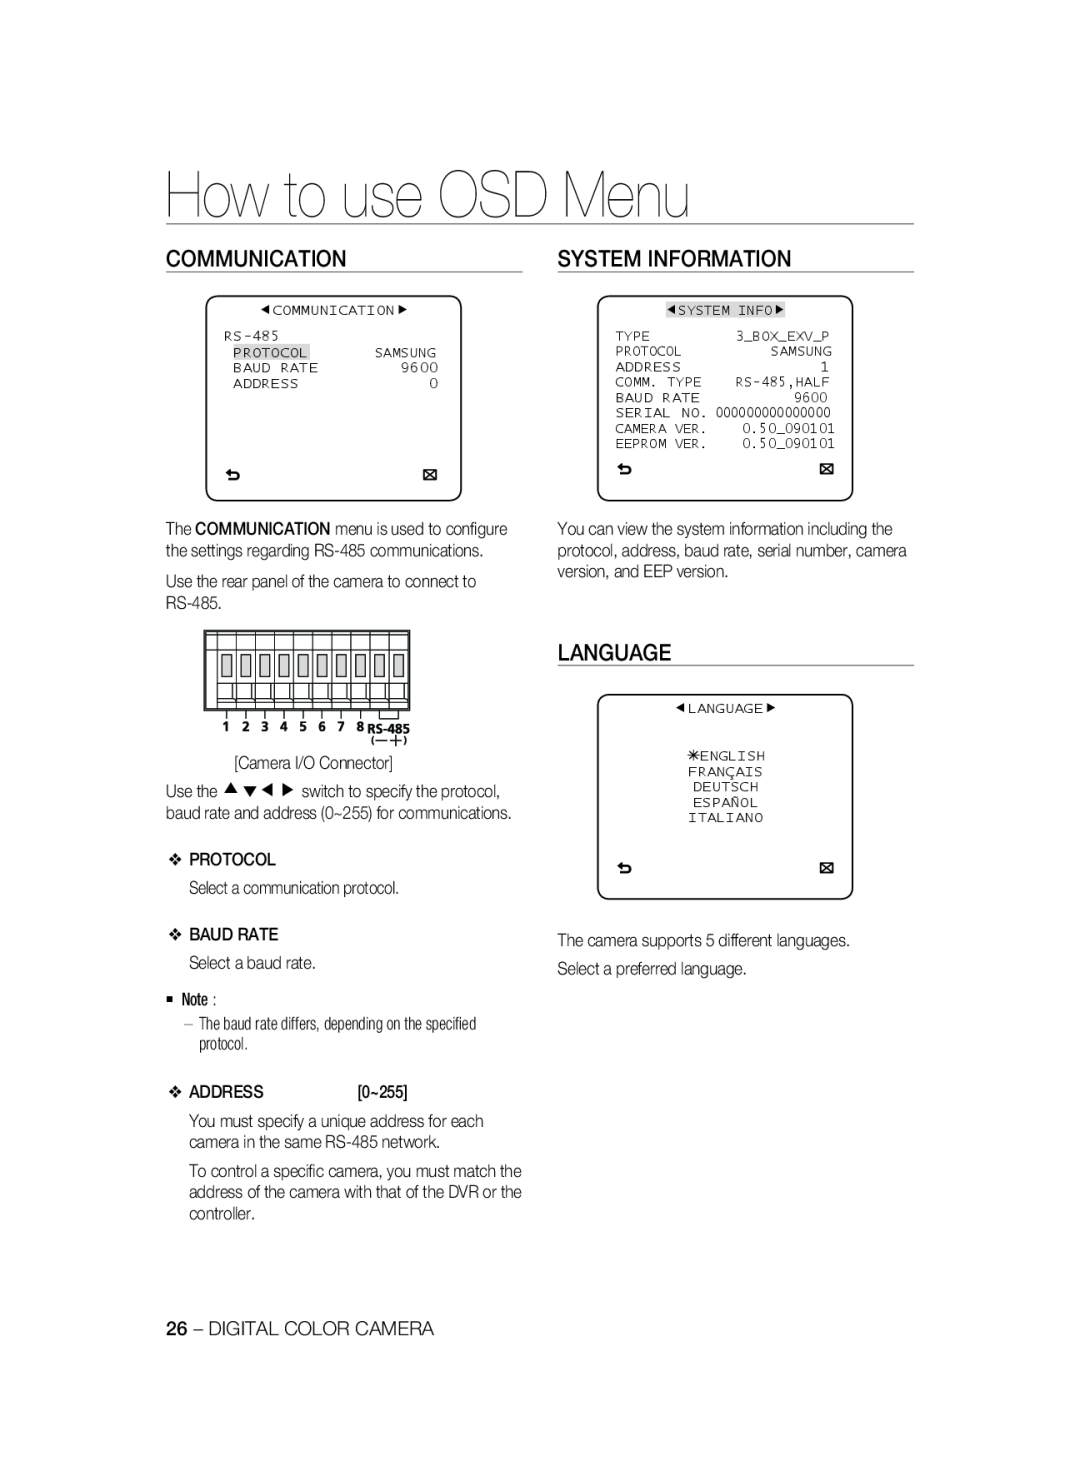 Samsung SCC-B2337N Communication, System Information, Language, How to use OSD Menu, Camera I/O Connector, Address, 0~255 